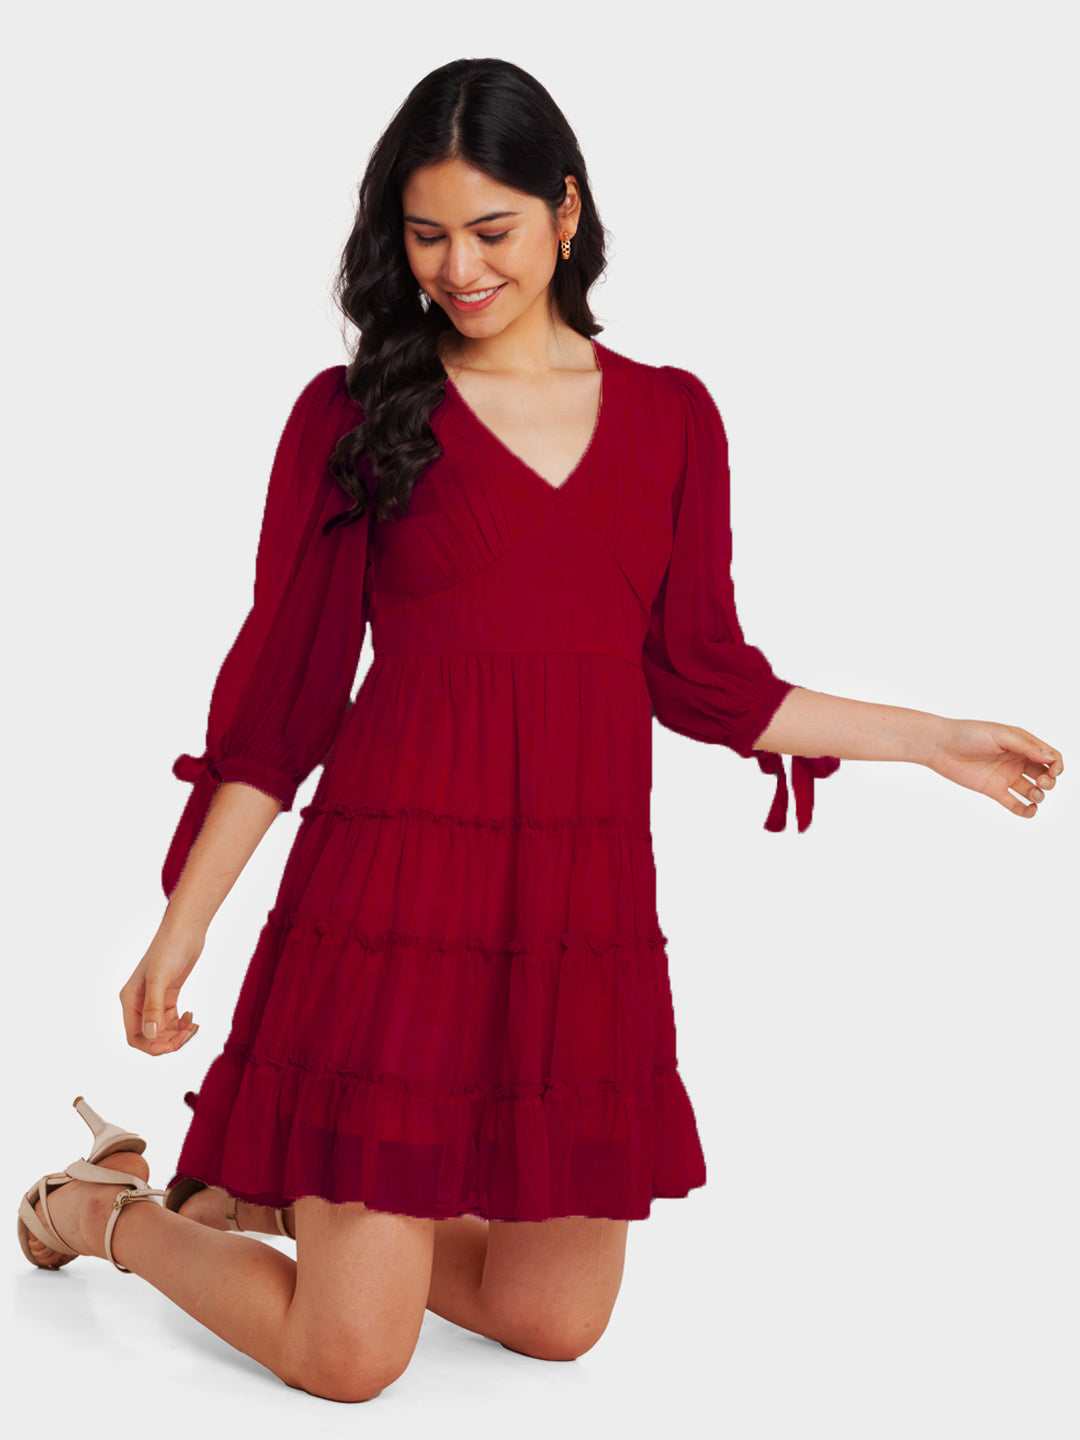 Crimson-Red-Solid-Fit-and-Flare-Short-Dress-VD02165_227-CrimsonRed-1